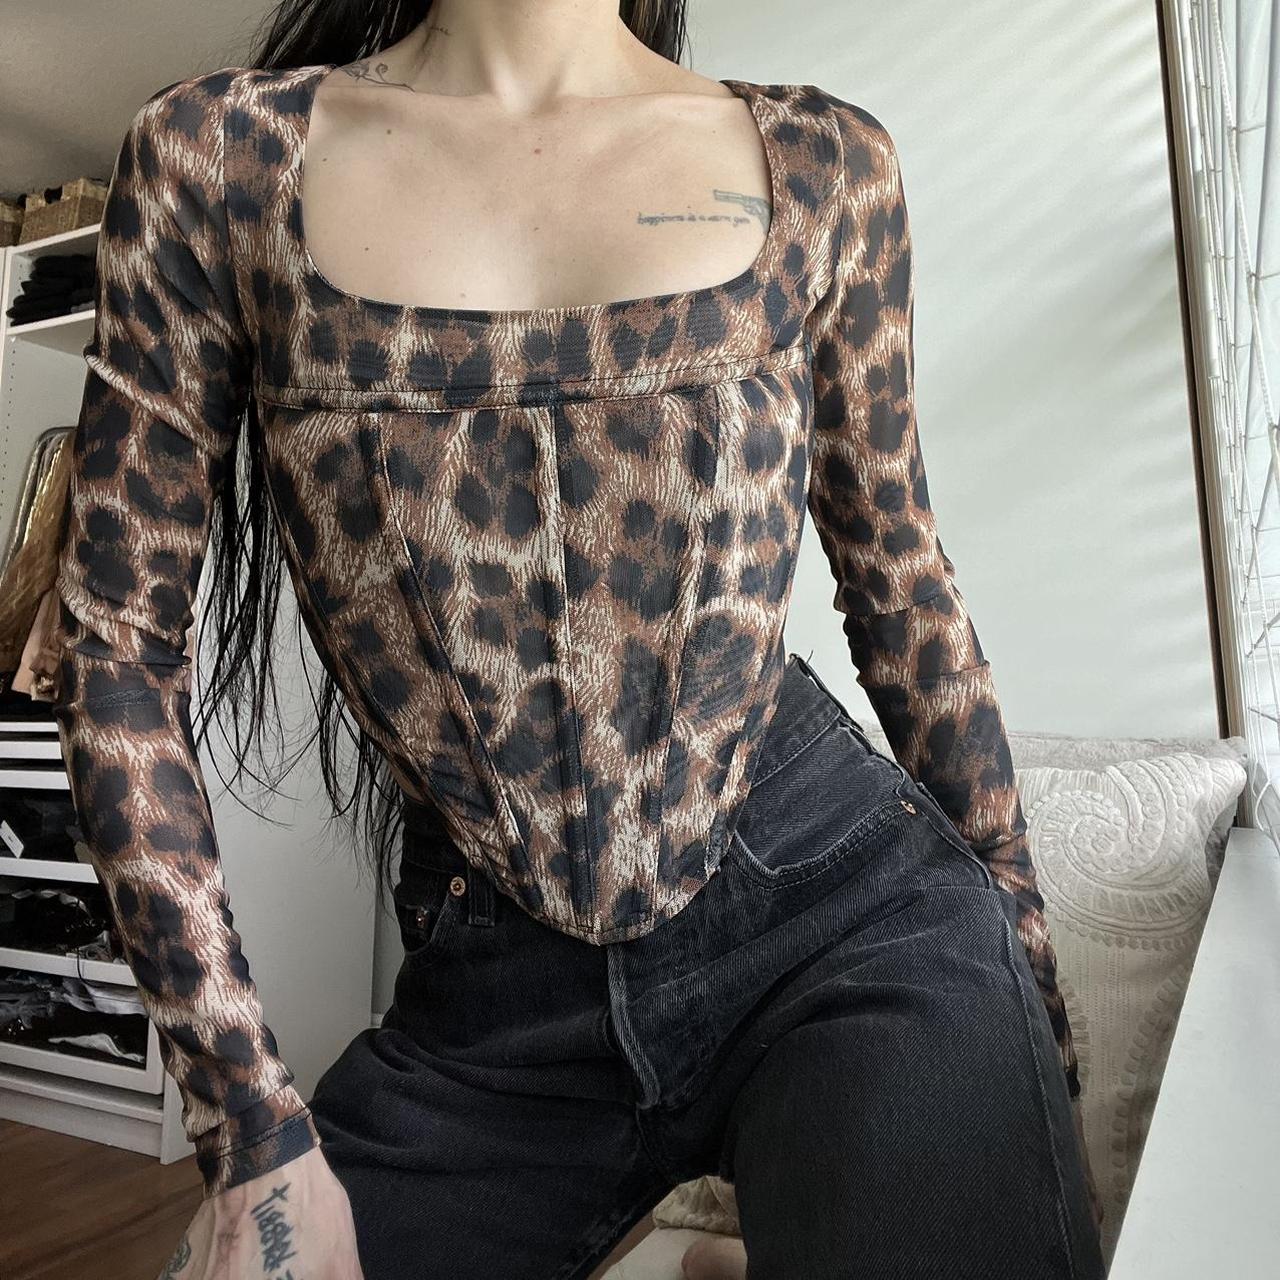 leopard corset top size small bust 32 - 34 length - Depop